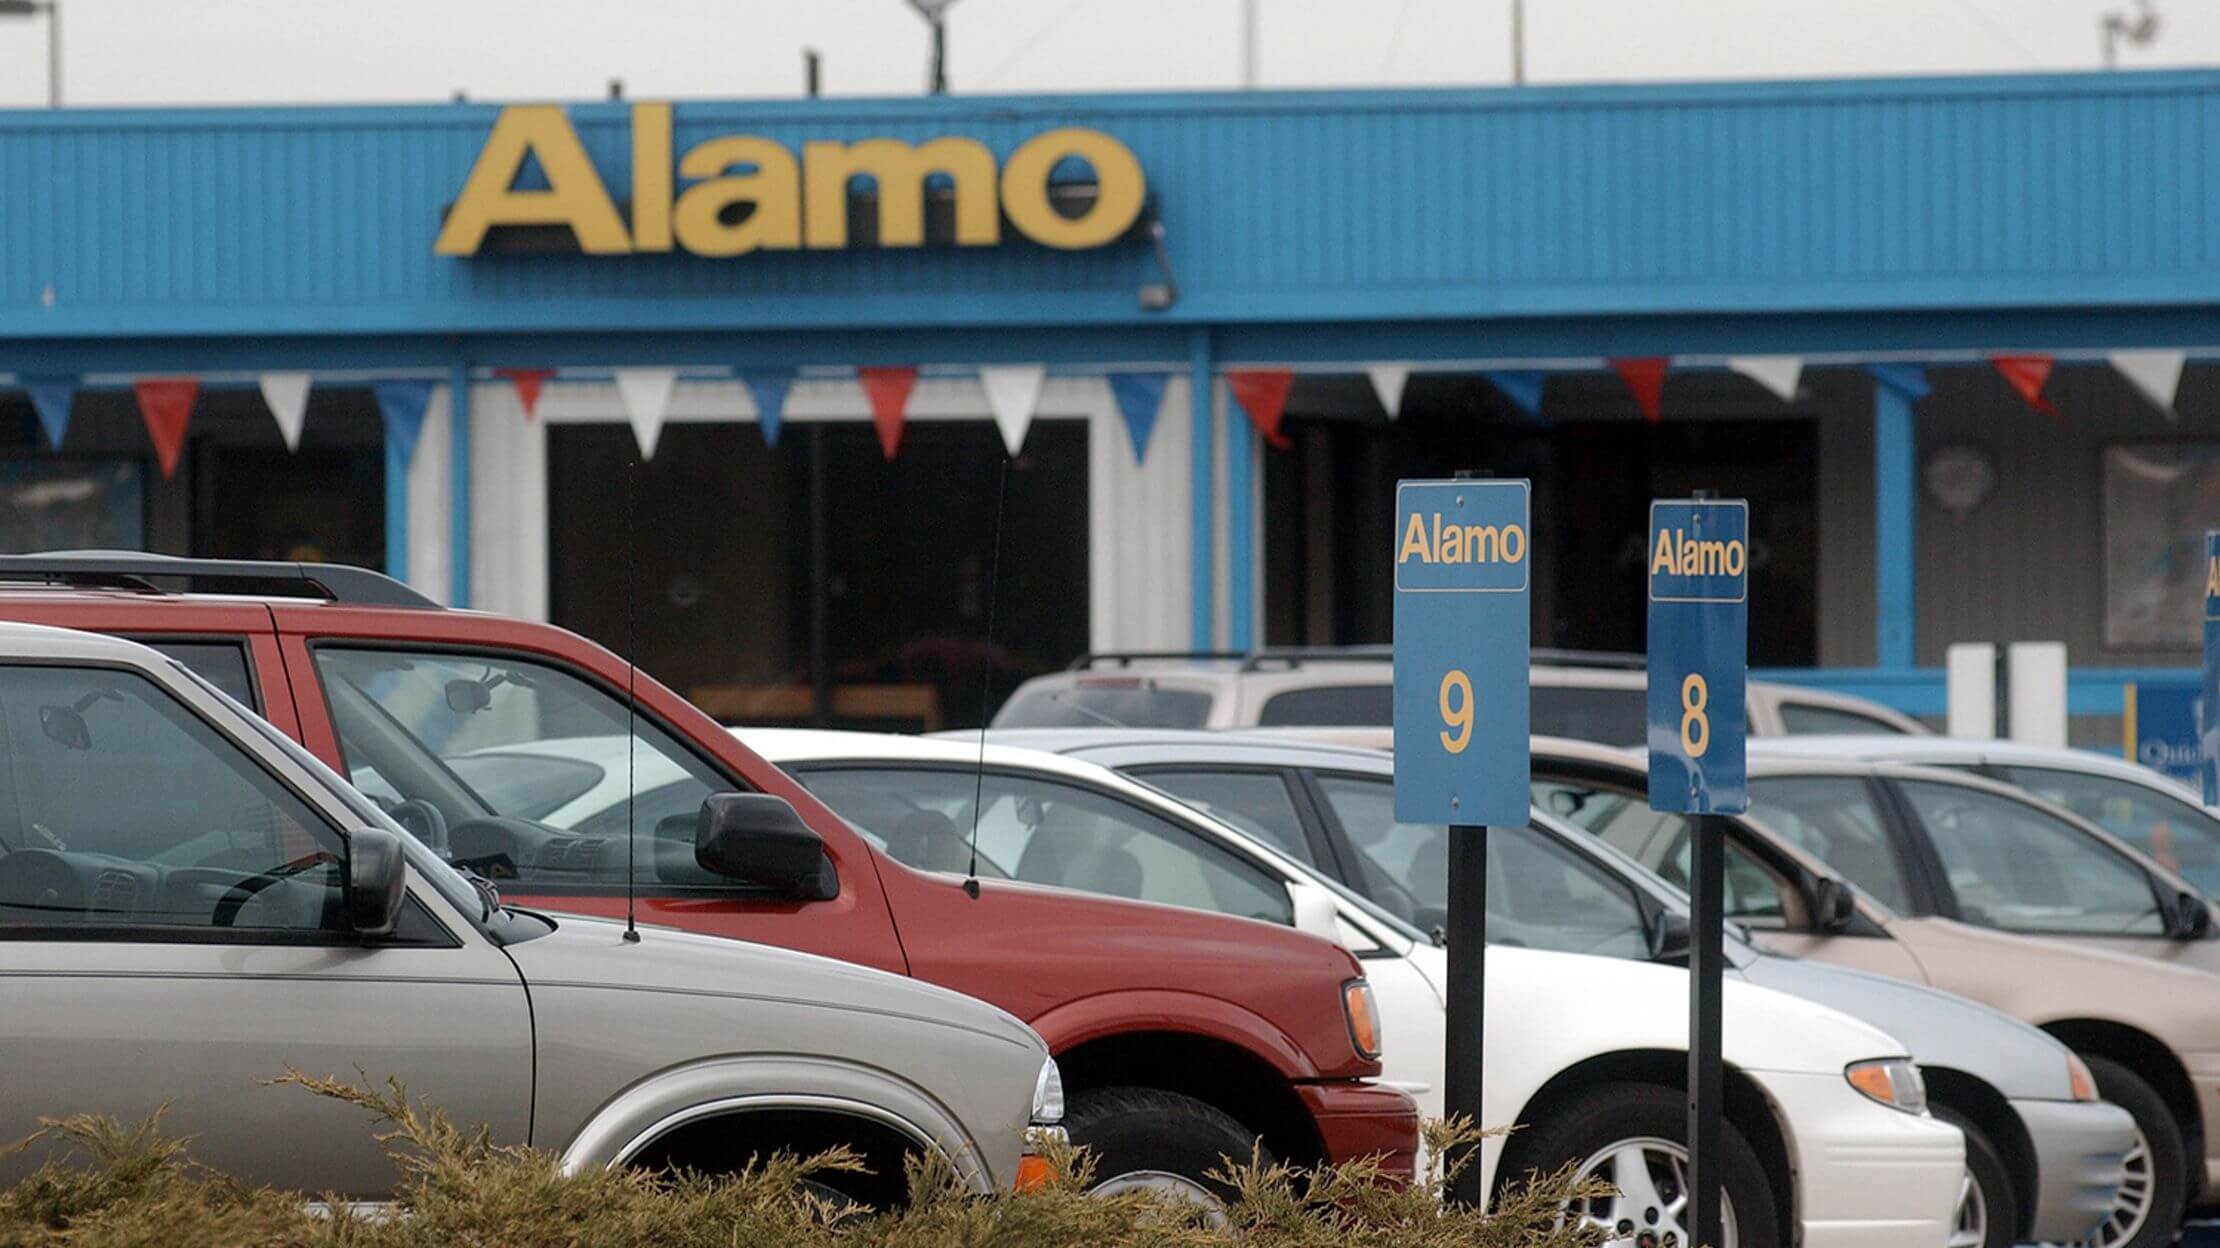 Alamo car Rental Review